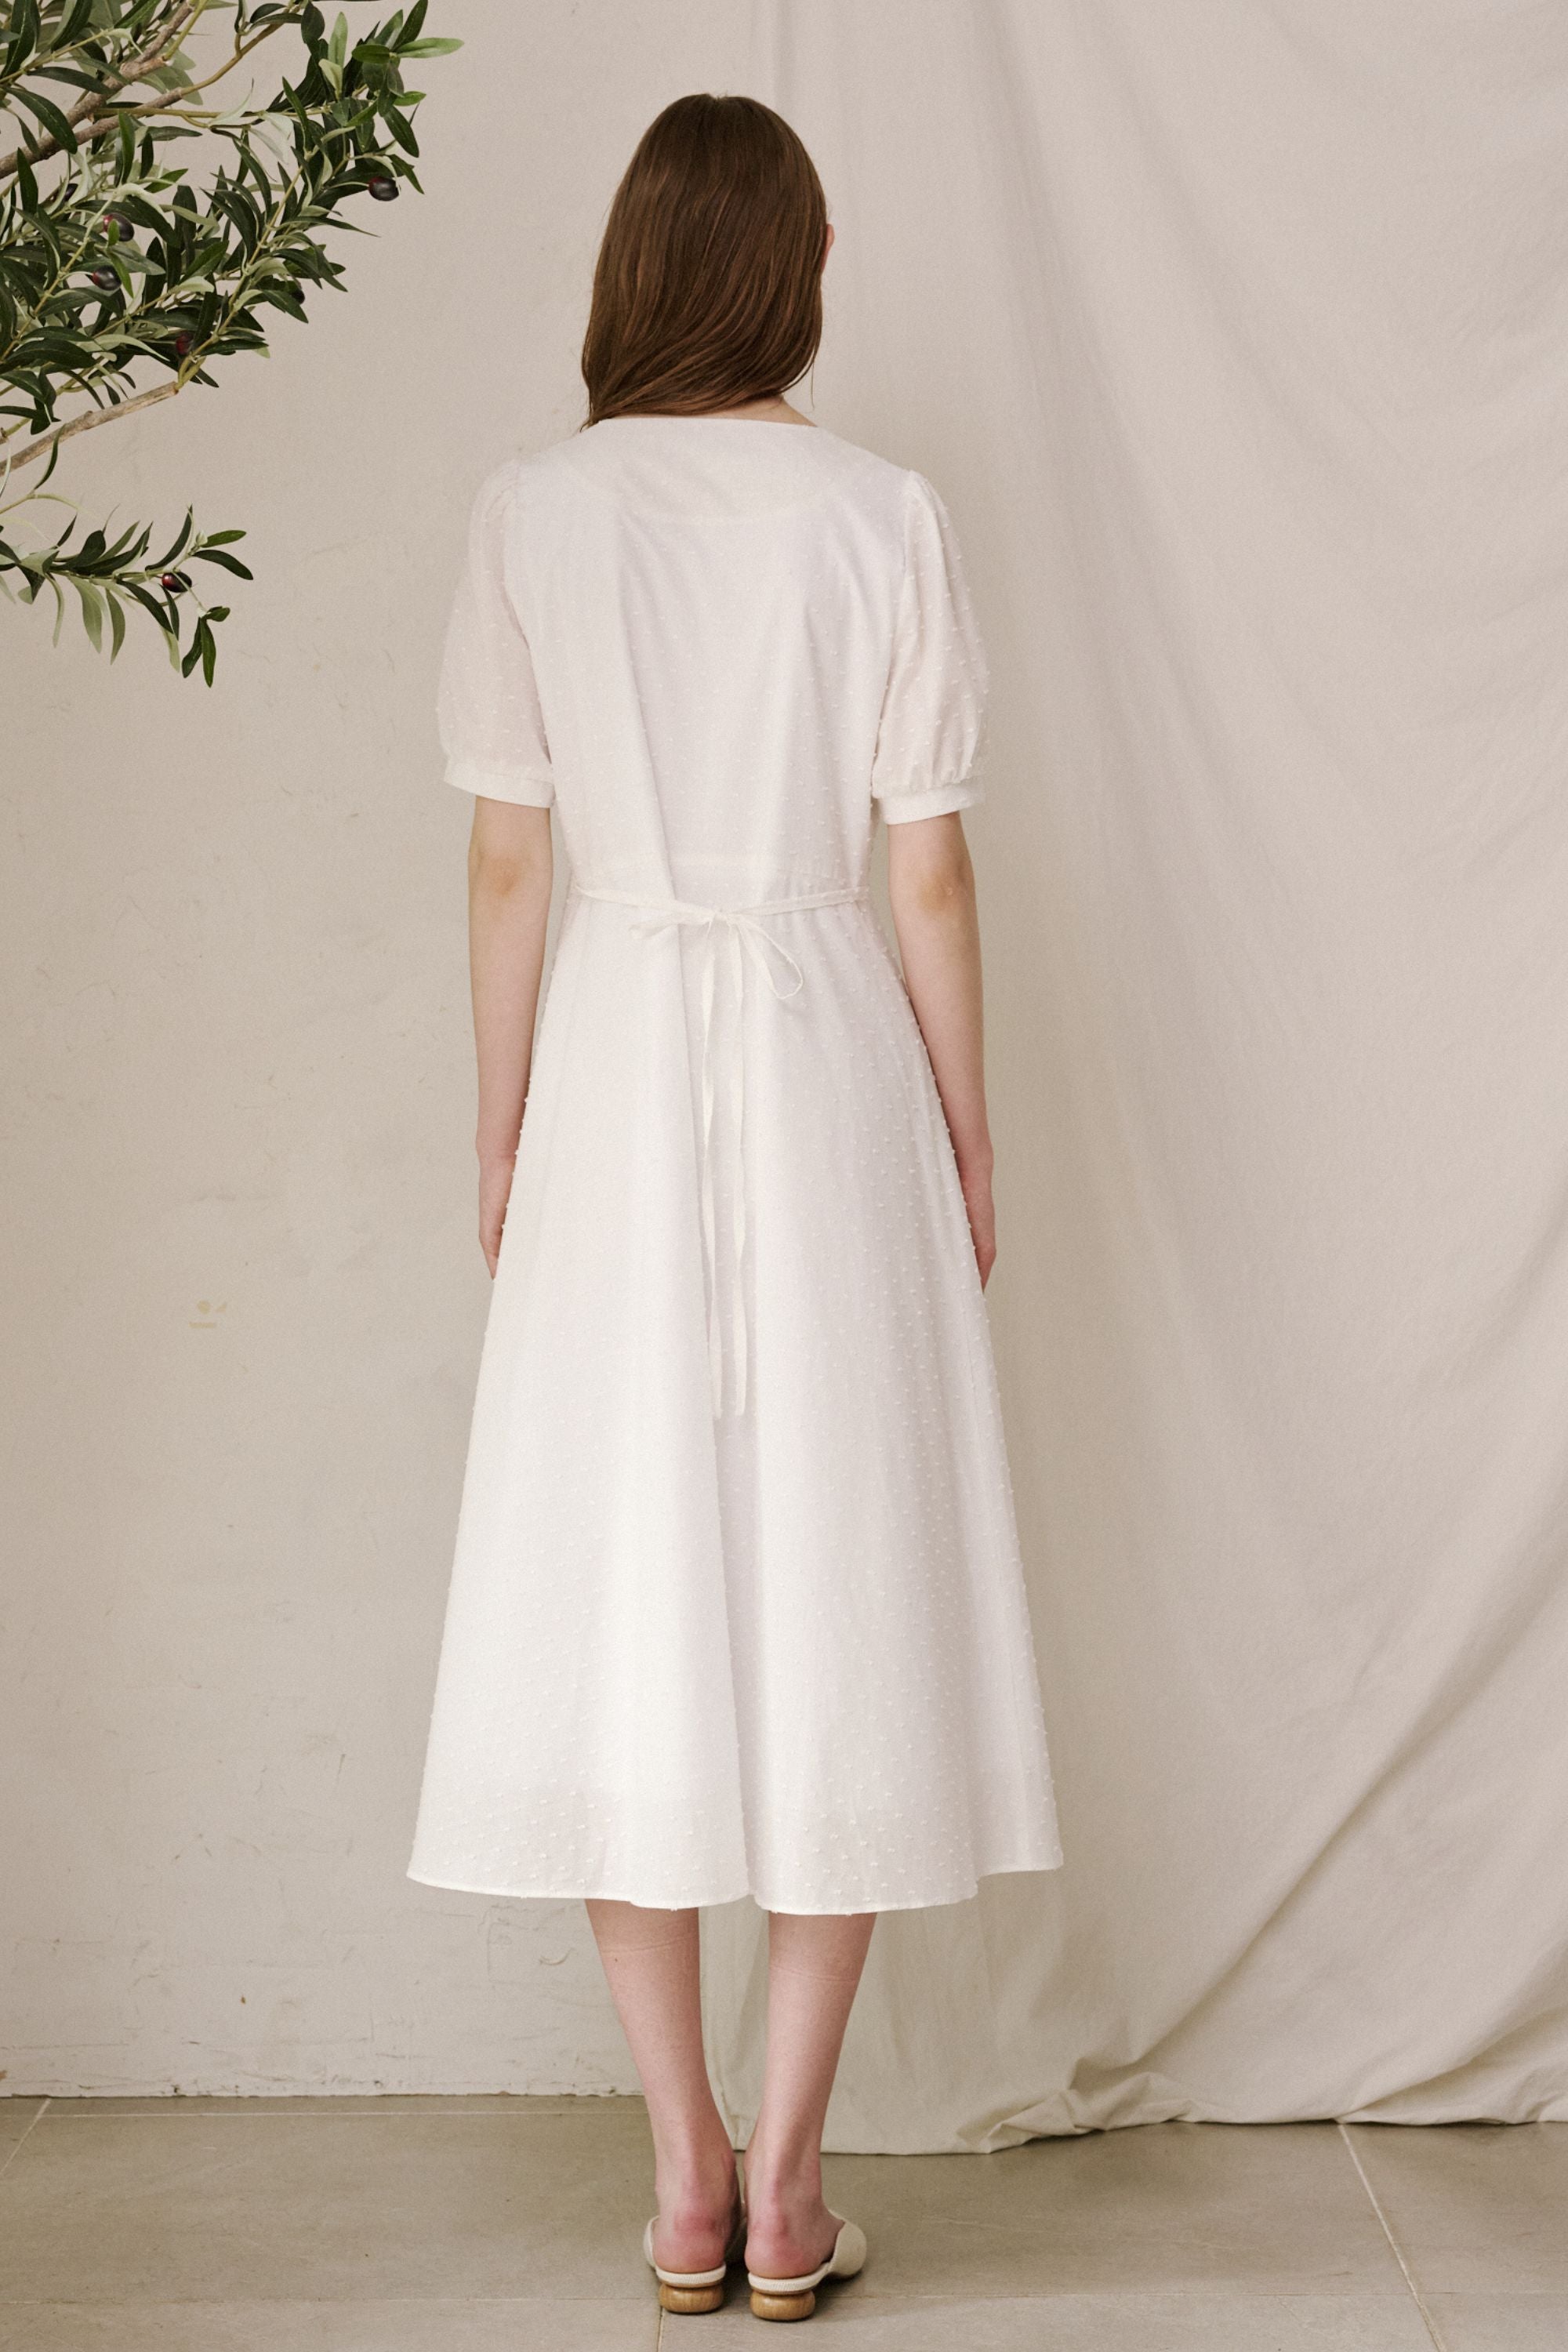 GREENEST - Dot Pattern Dress | White, buy at DOORS NYC